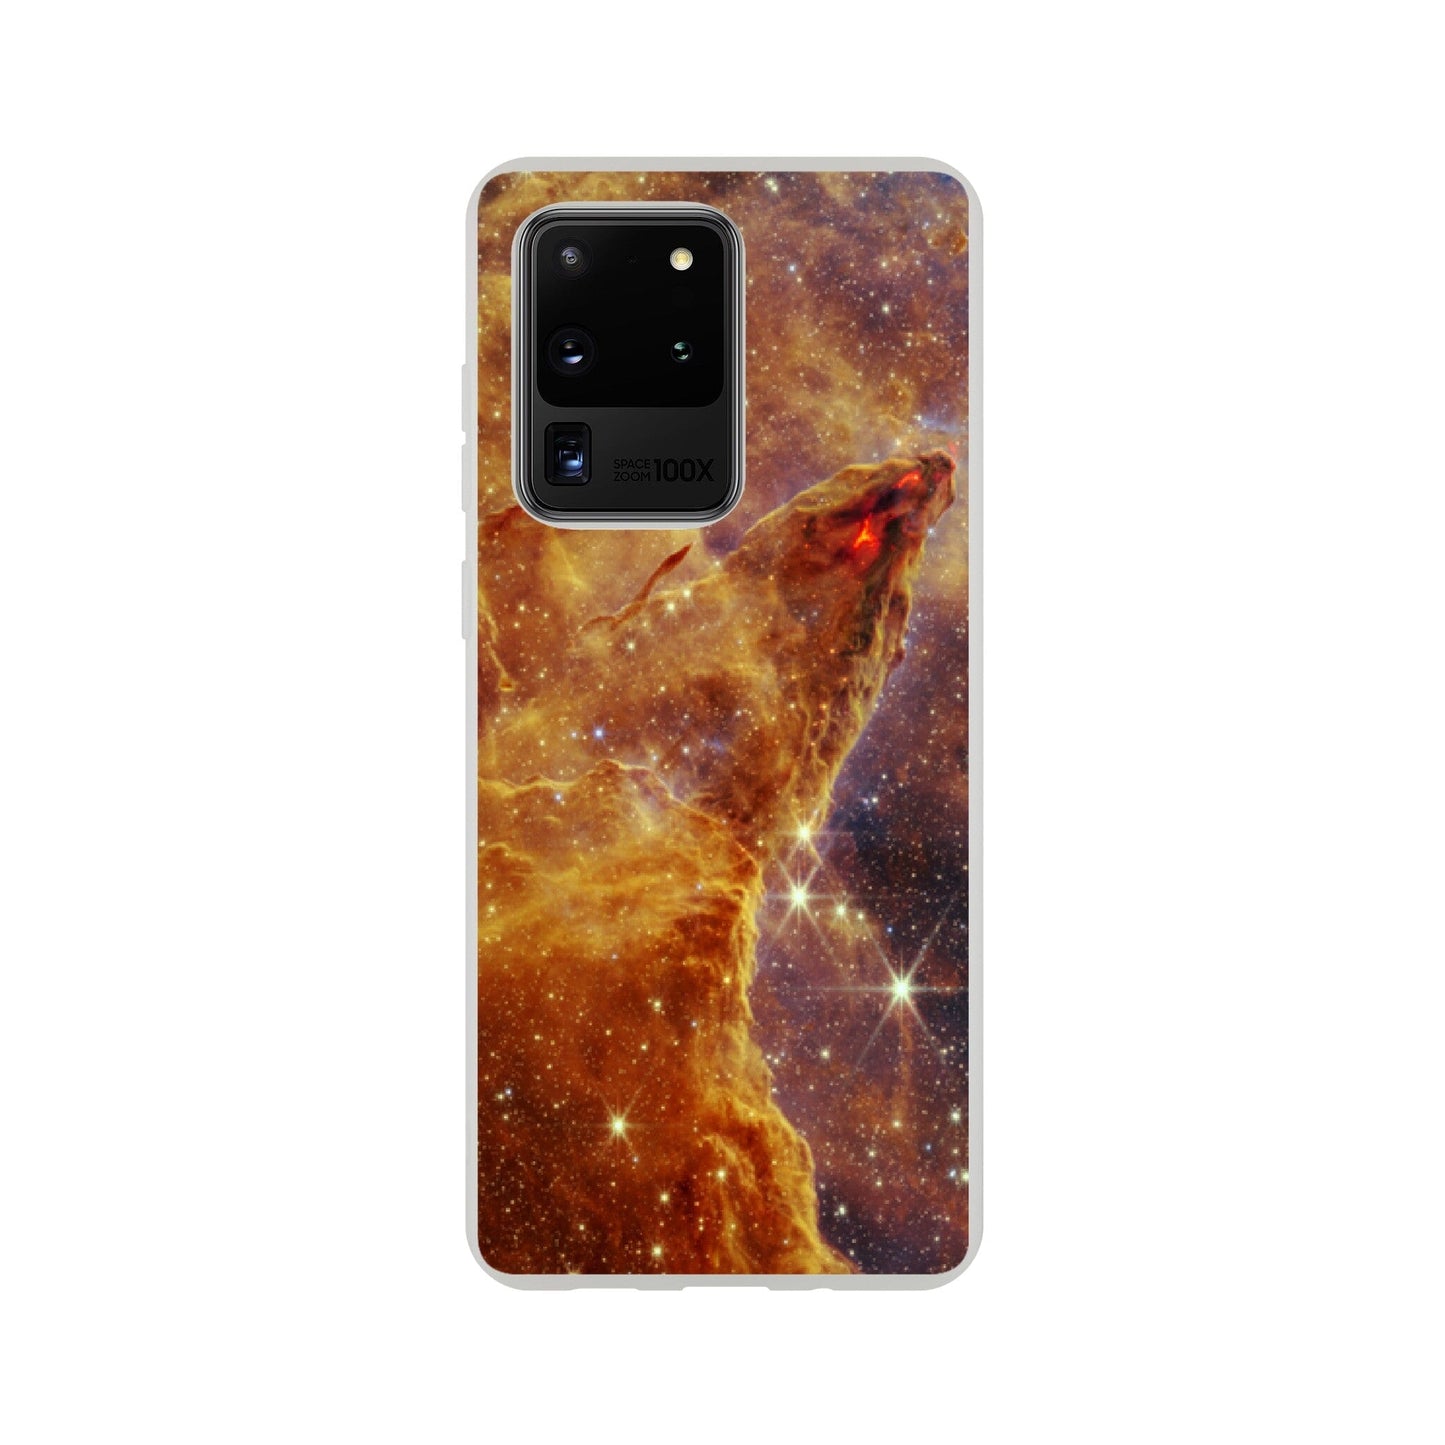 NASA - Phone Case Flexi - 9. Pillars of Creation (NIRCam Image) - James Webb Space Telescope Phone Case TP Aviation Art Galaxy S20 Ultra 